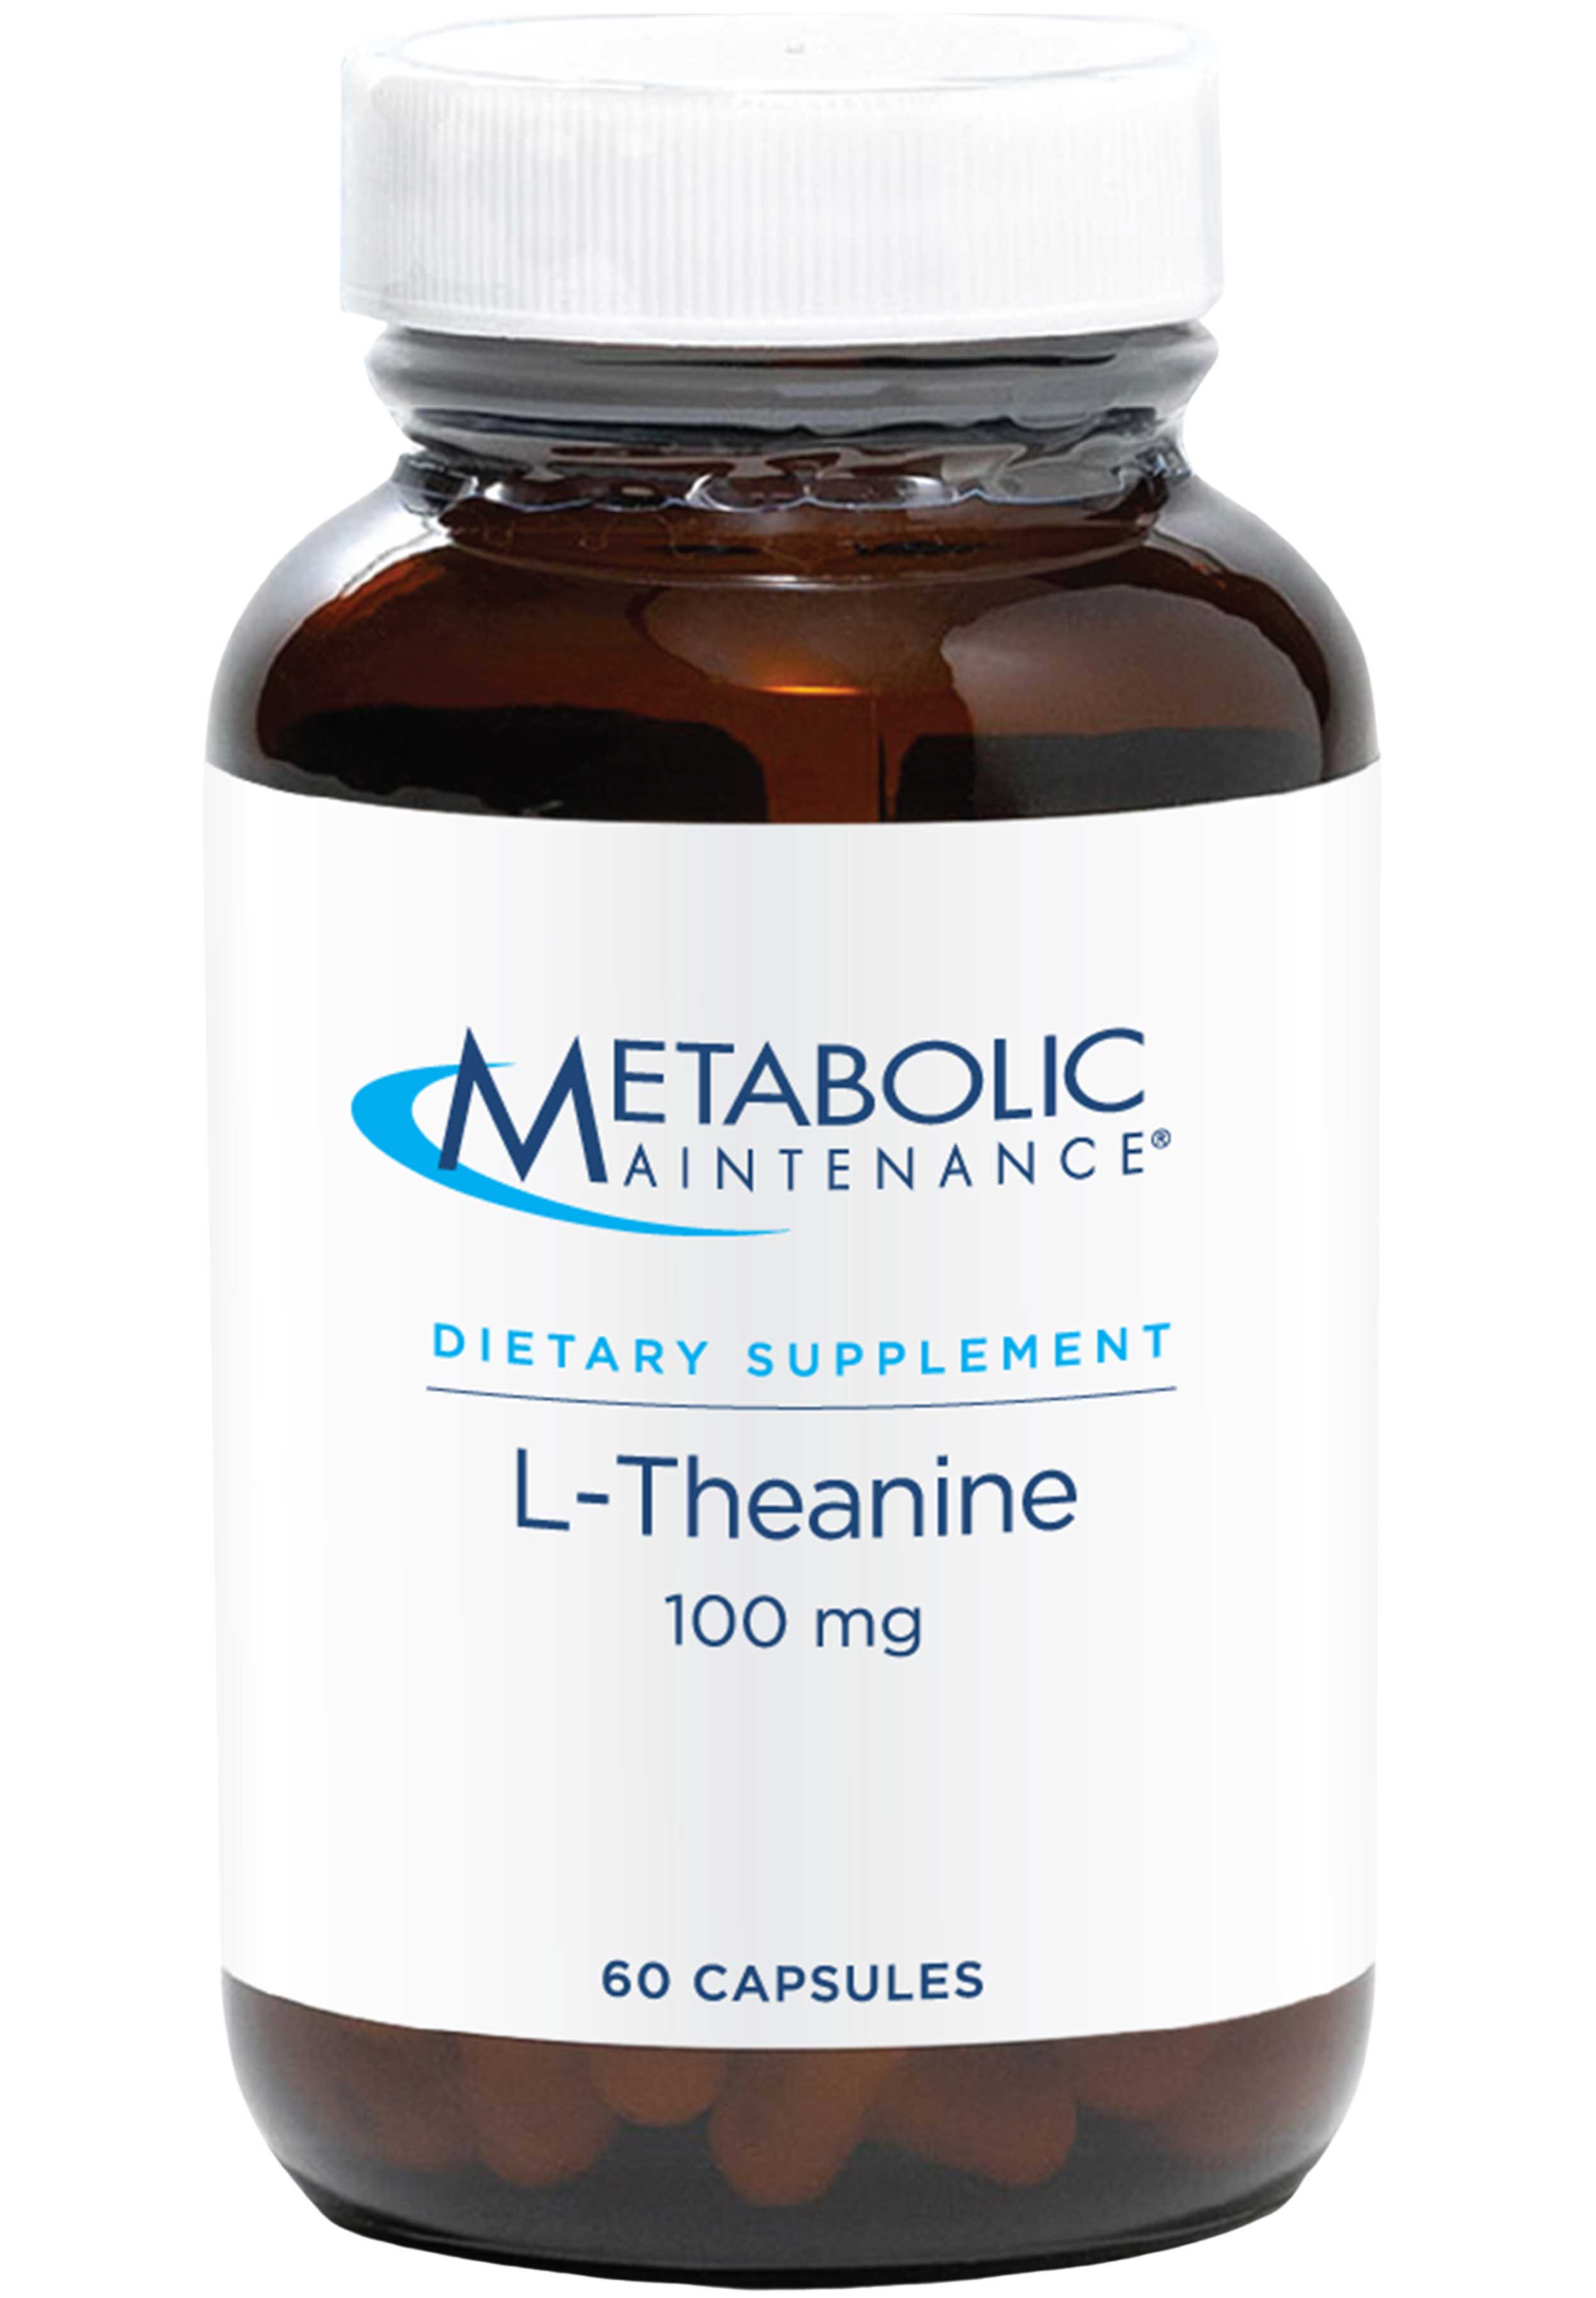 Metabolic Maintenance L-Theanine